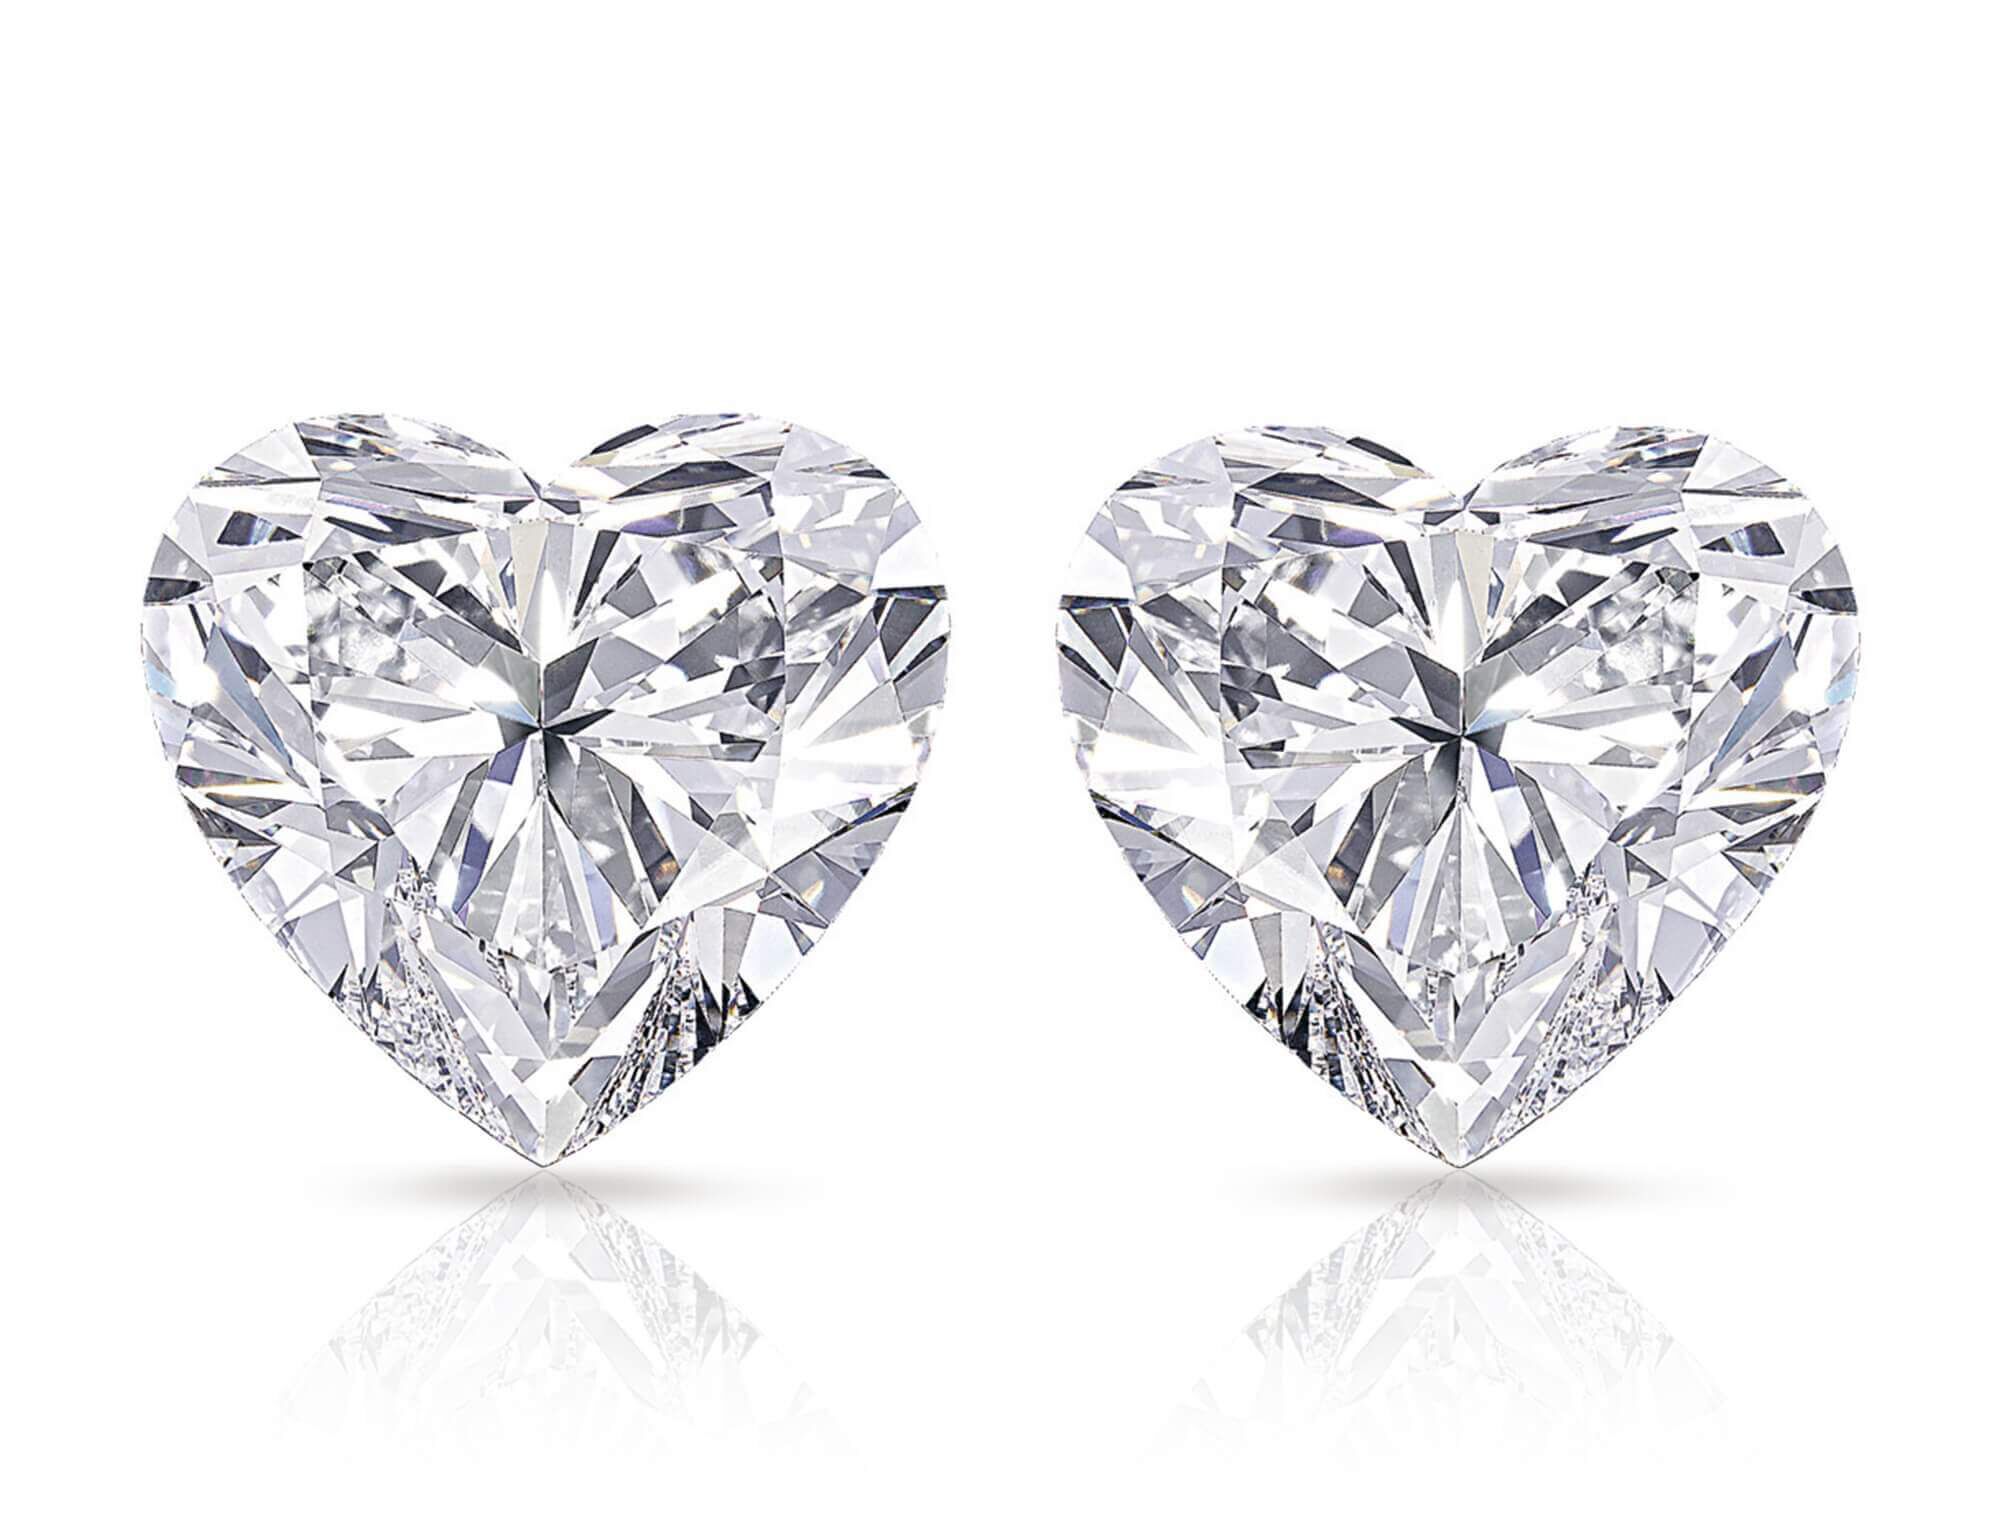 The Graff Sweethearts - 51.53 and 50.76 carat heart shape famous diamonds